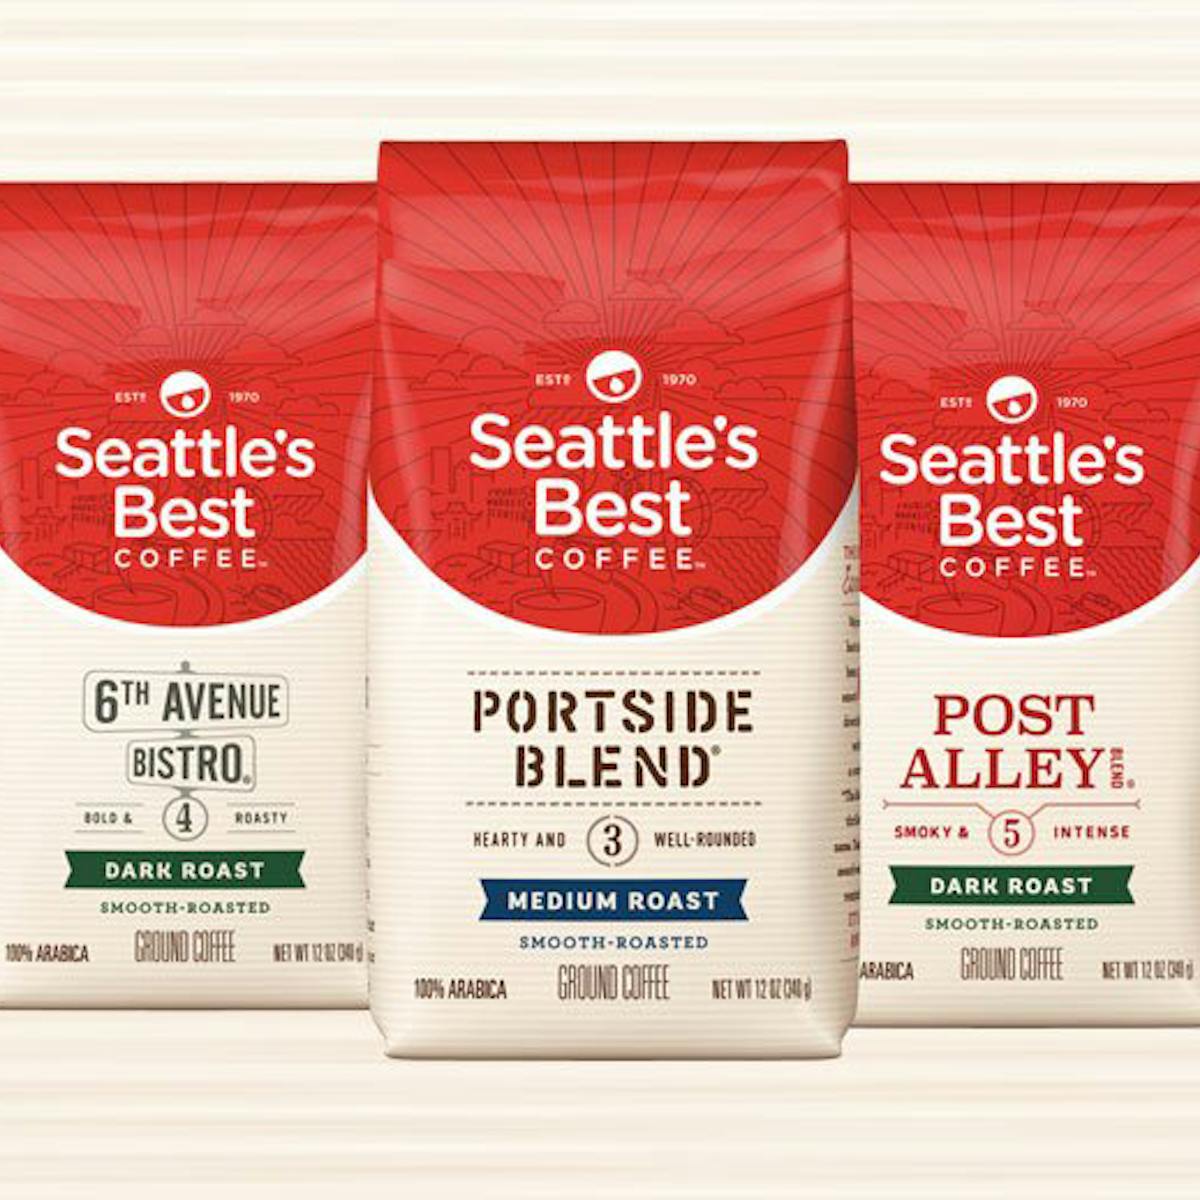 Seattles Best Coffee Feed